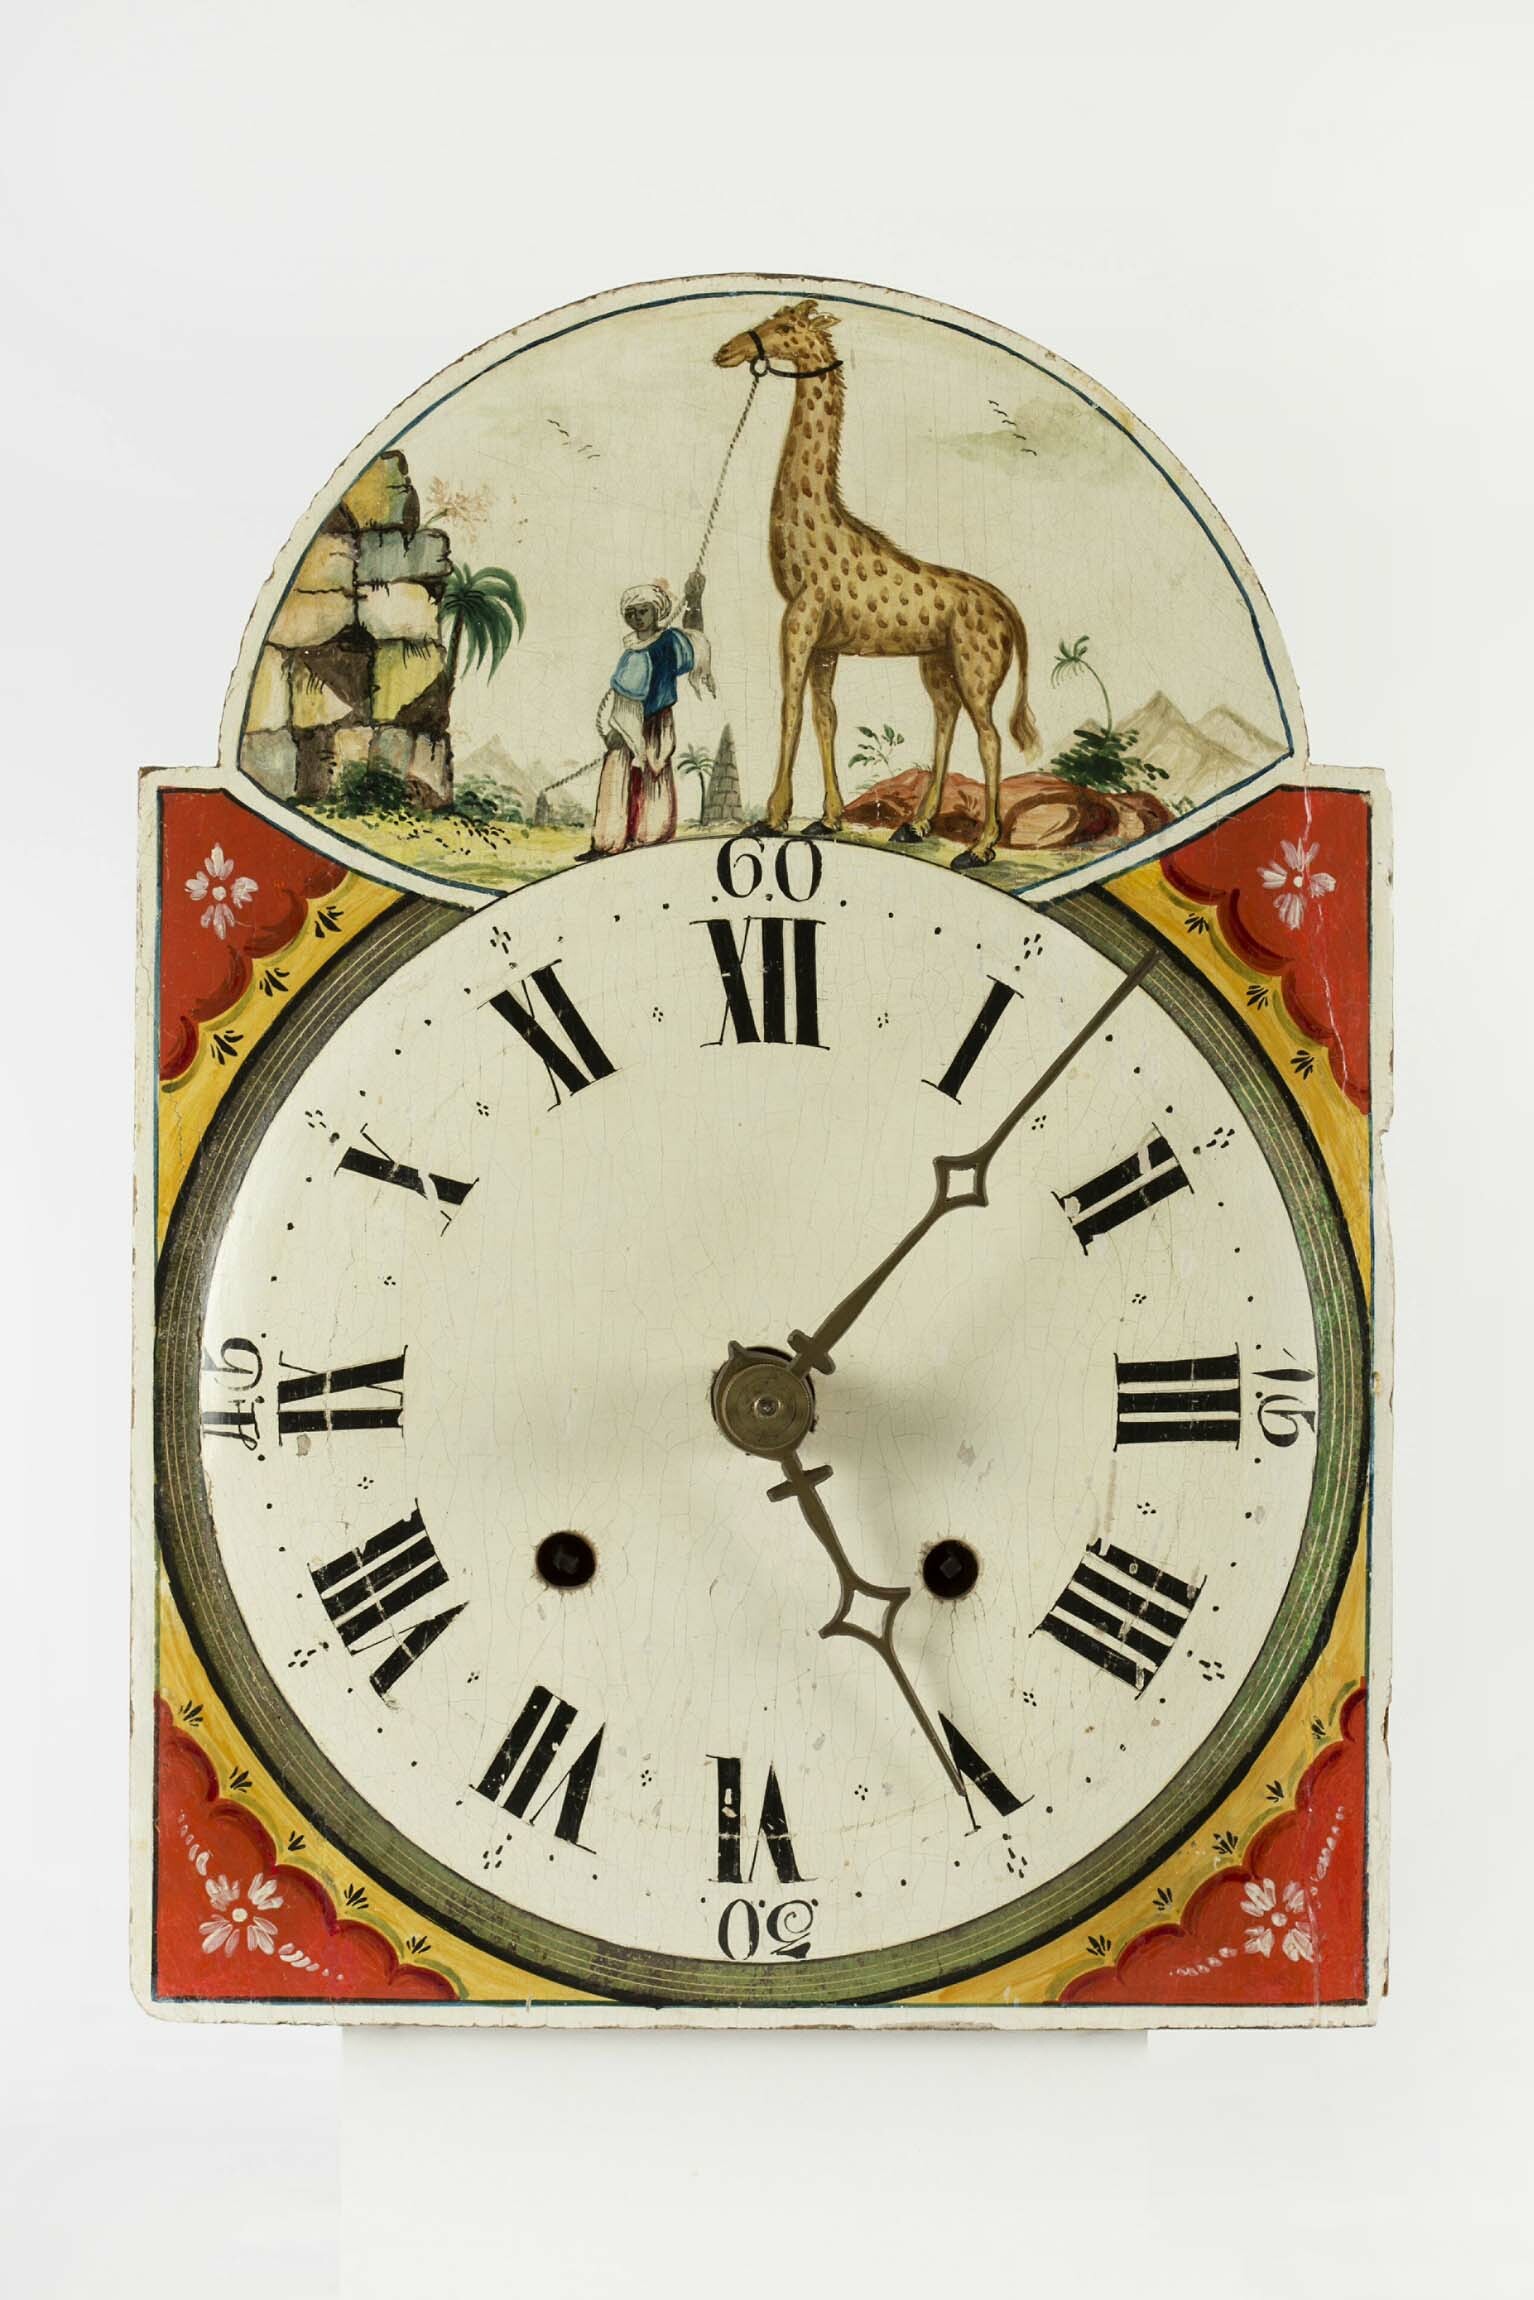 Lackschilduhr, Joseph Hummel, Furtwangen, um 1830 (Deutsches Uhrenmuseum CC BY-SA)